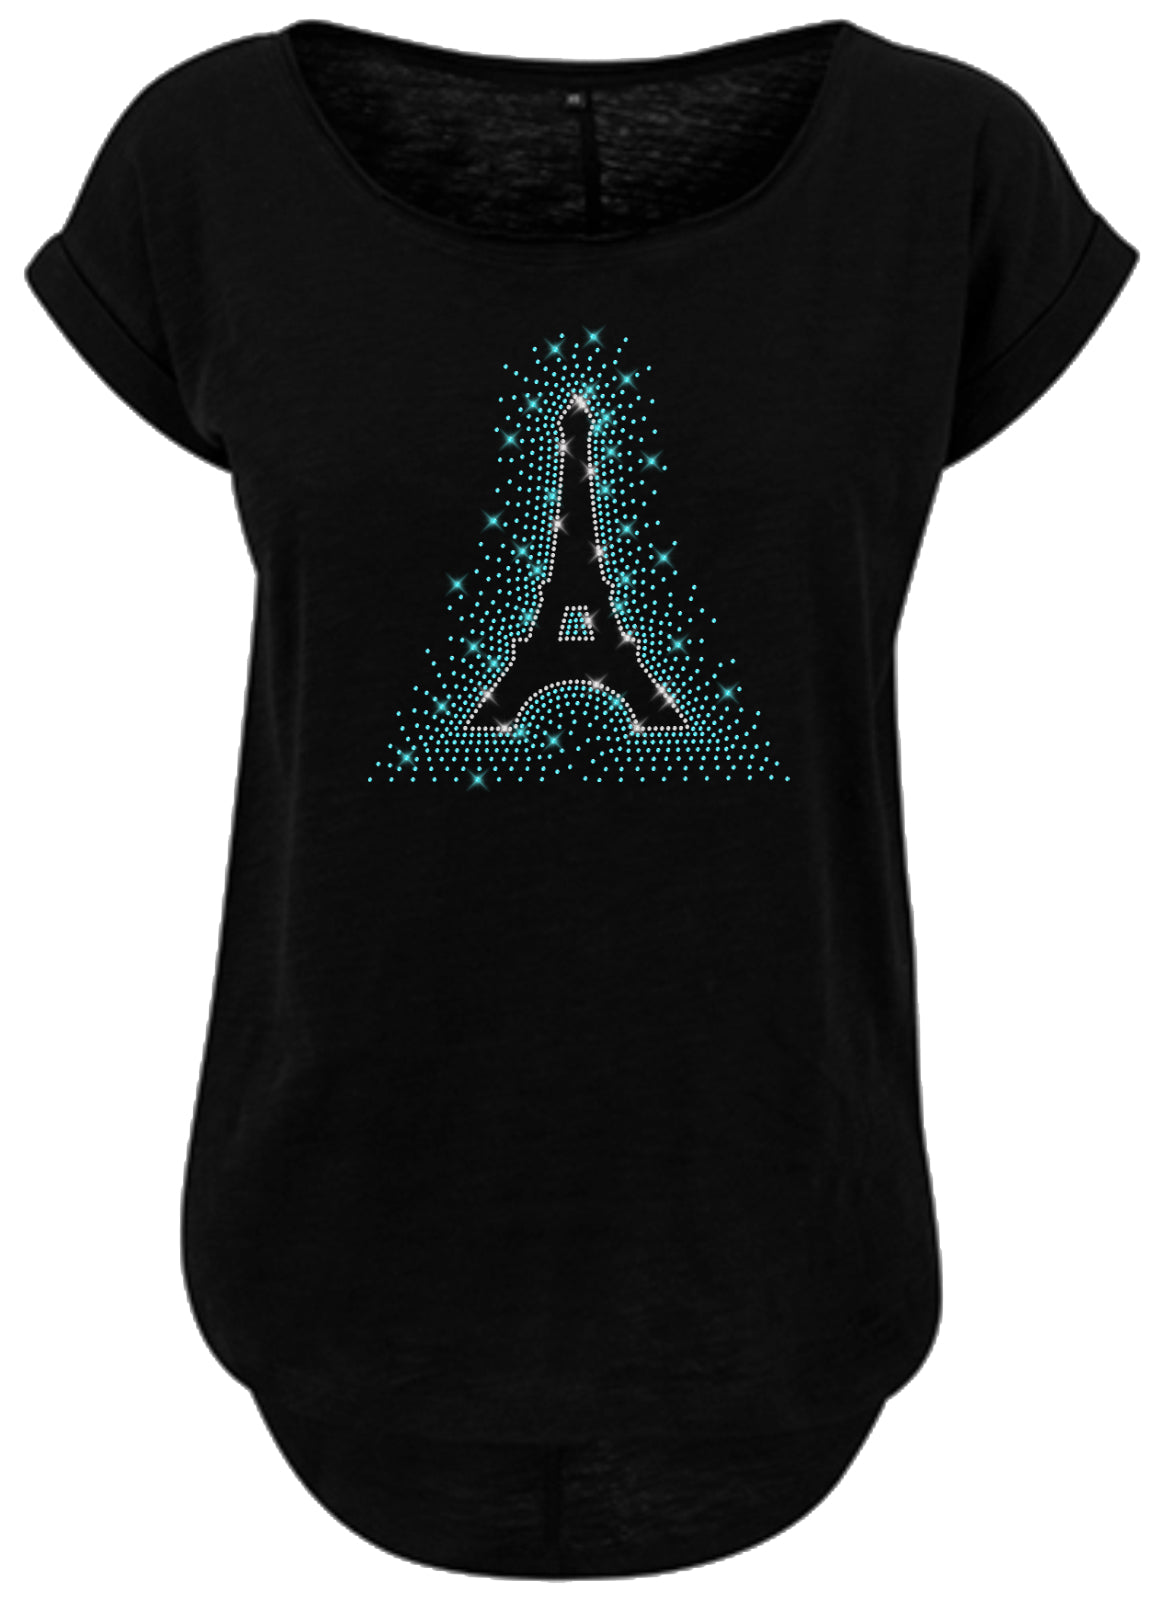 Blingeling®Shirts Damen T-Shirt   Eiffelturm in Strass Hellblau Paris, Frankreich